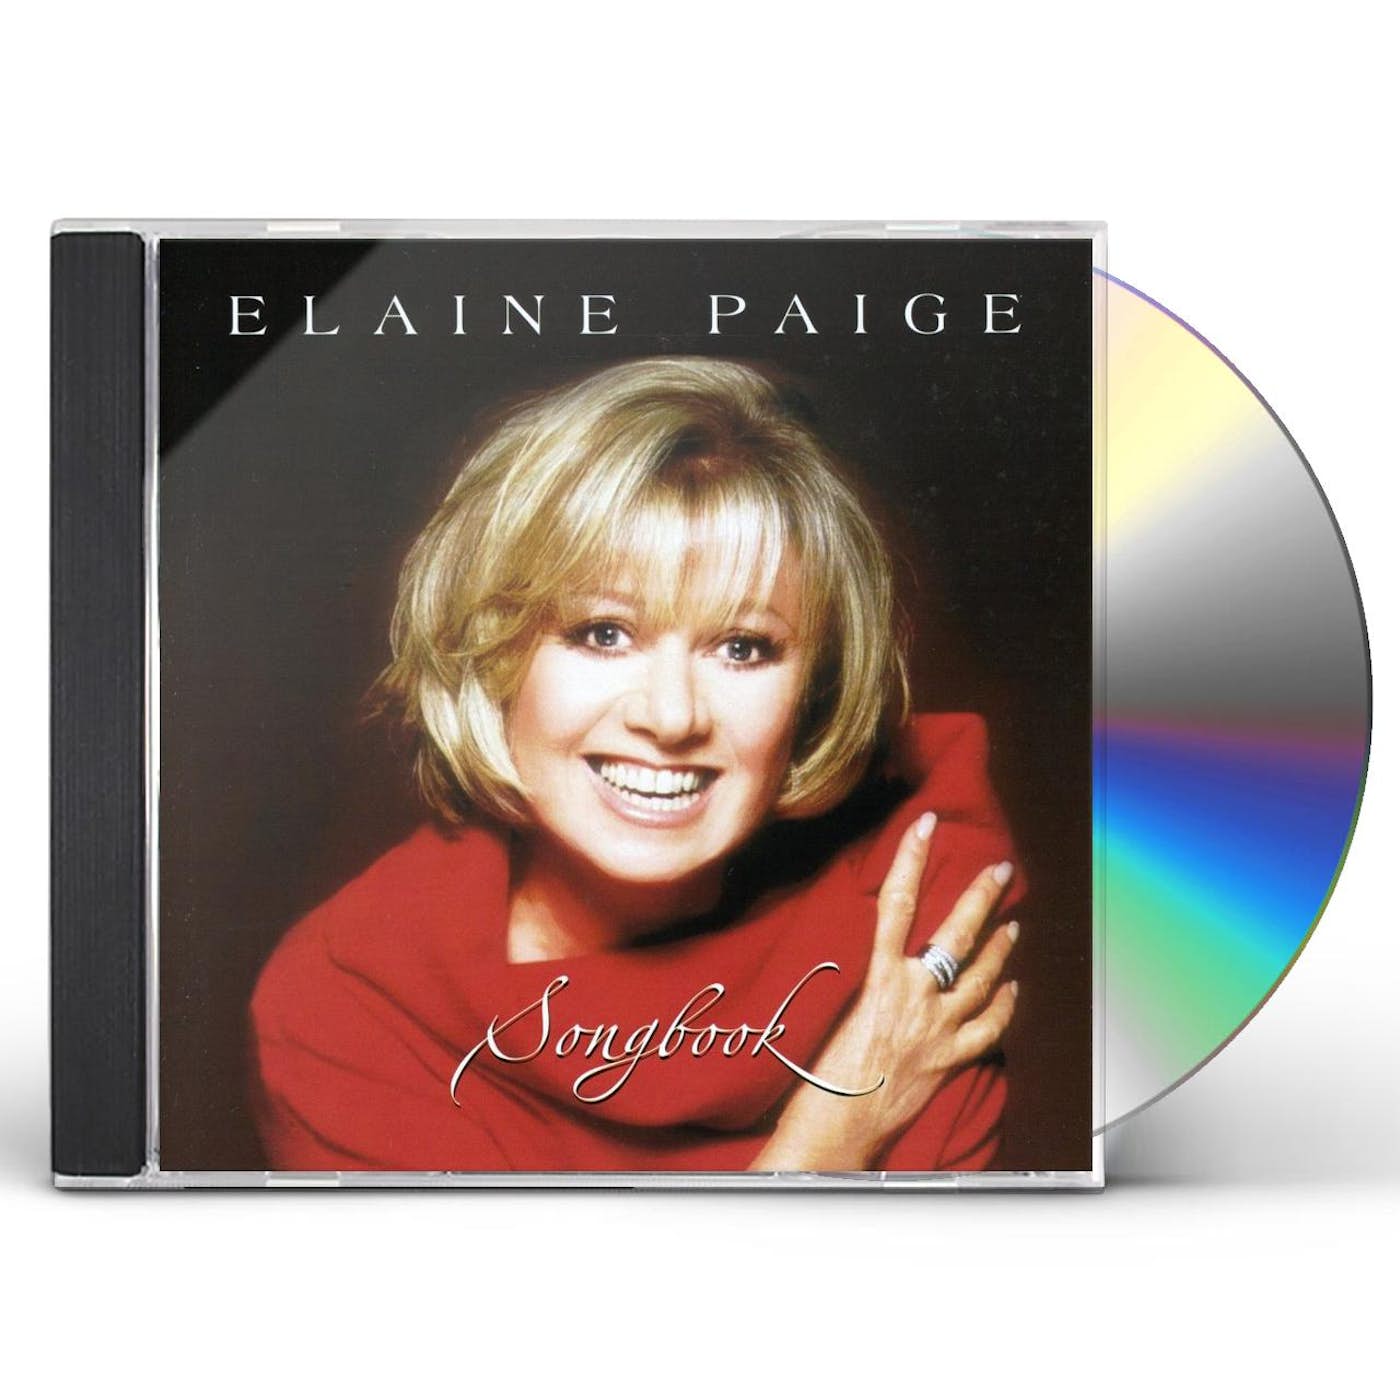 Elaine Paige SONGBOOK CD